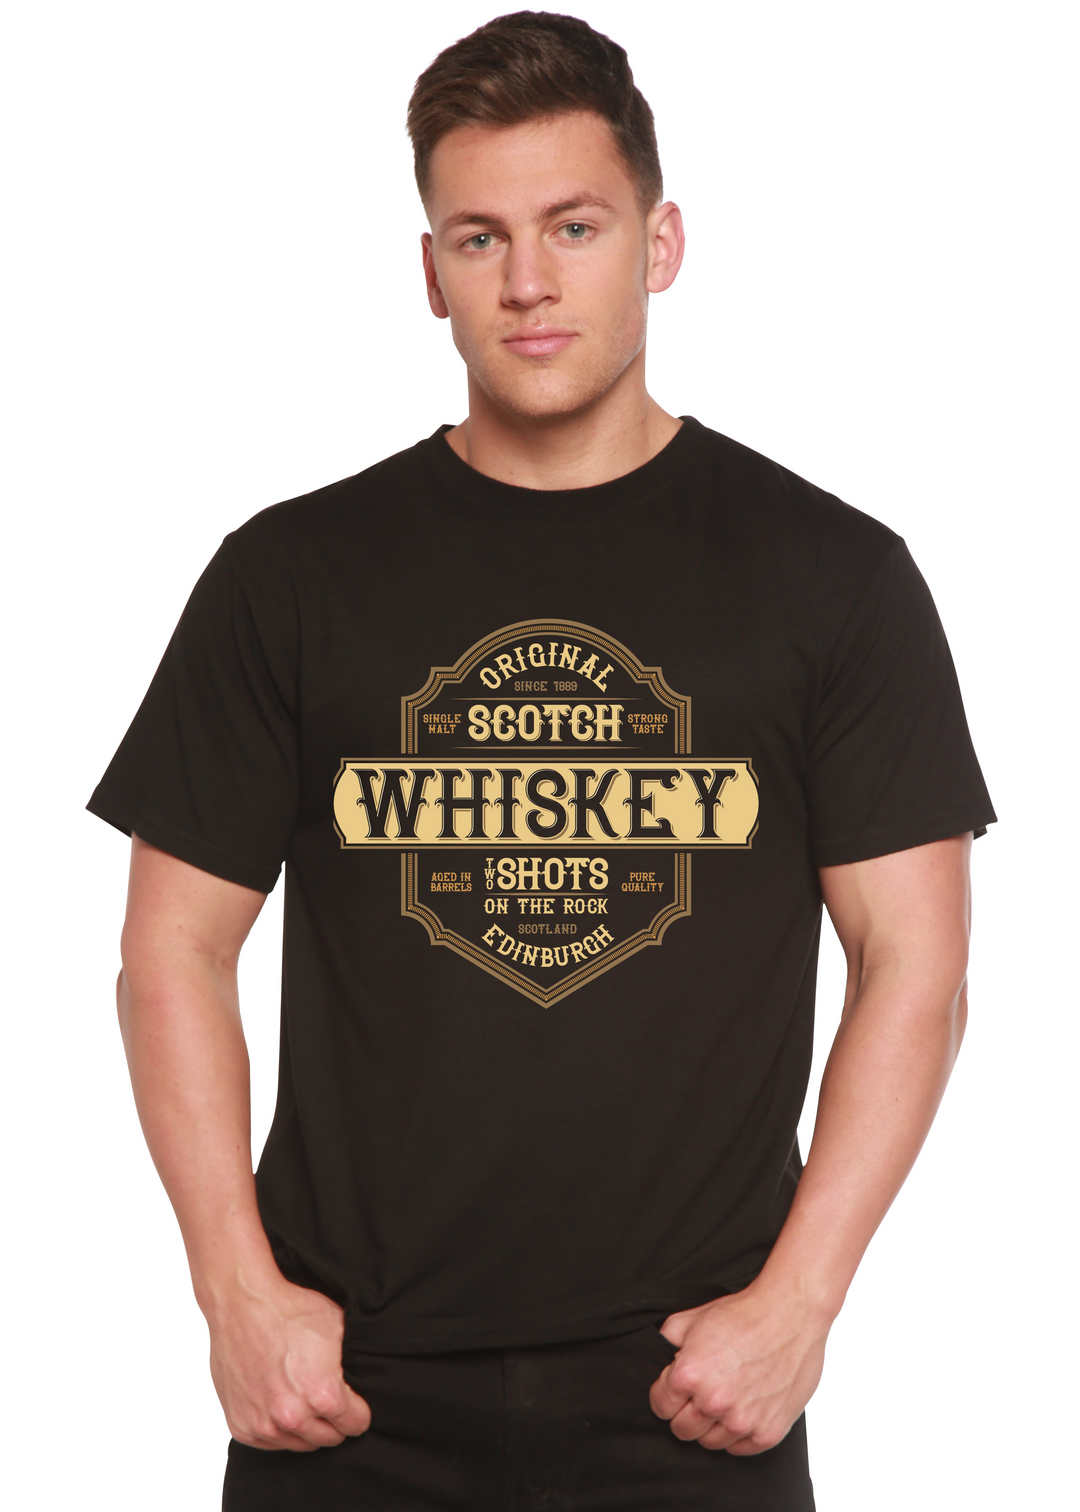 Whiskey men's bamboo tshirt black